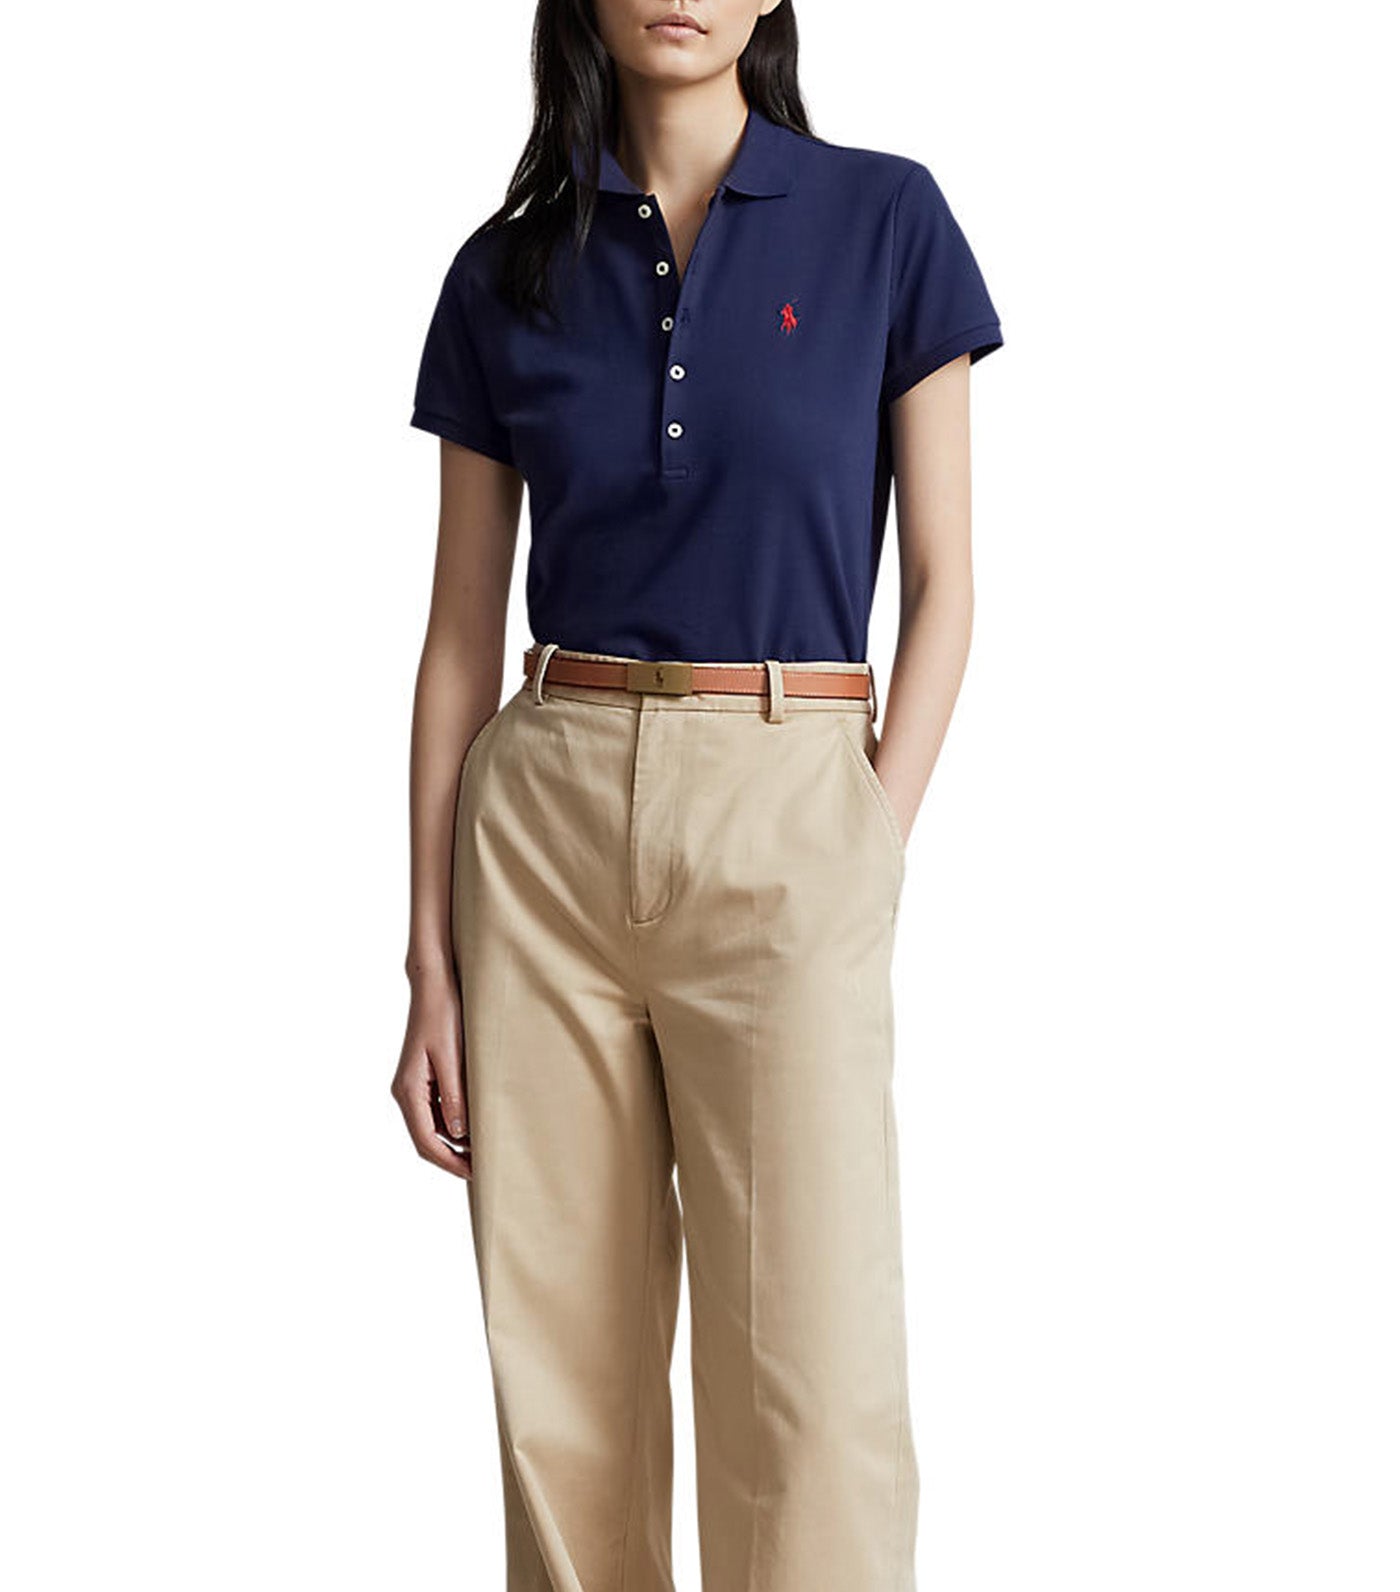 Women's Slim Fit Stretch Polo Shirt Newport Navy